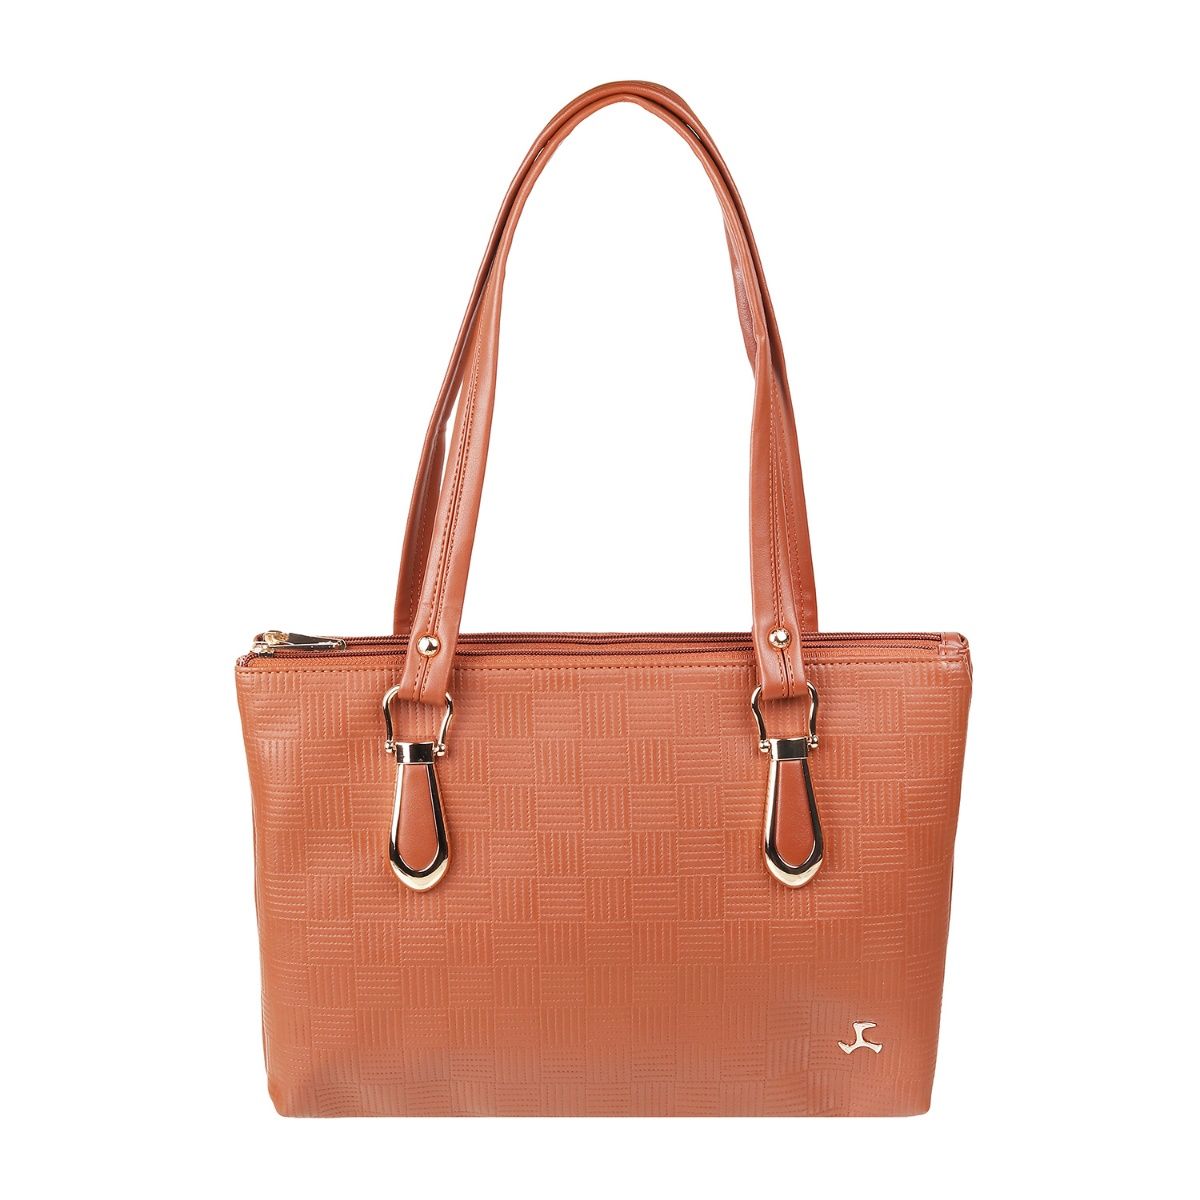 Coral Pink Handbags - Buy Coral Pink Handbags online in India